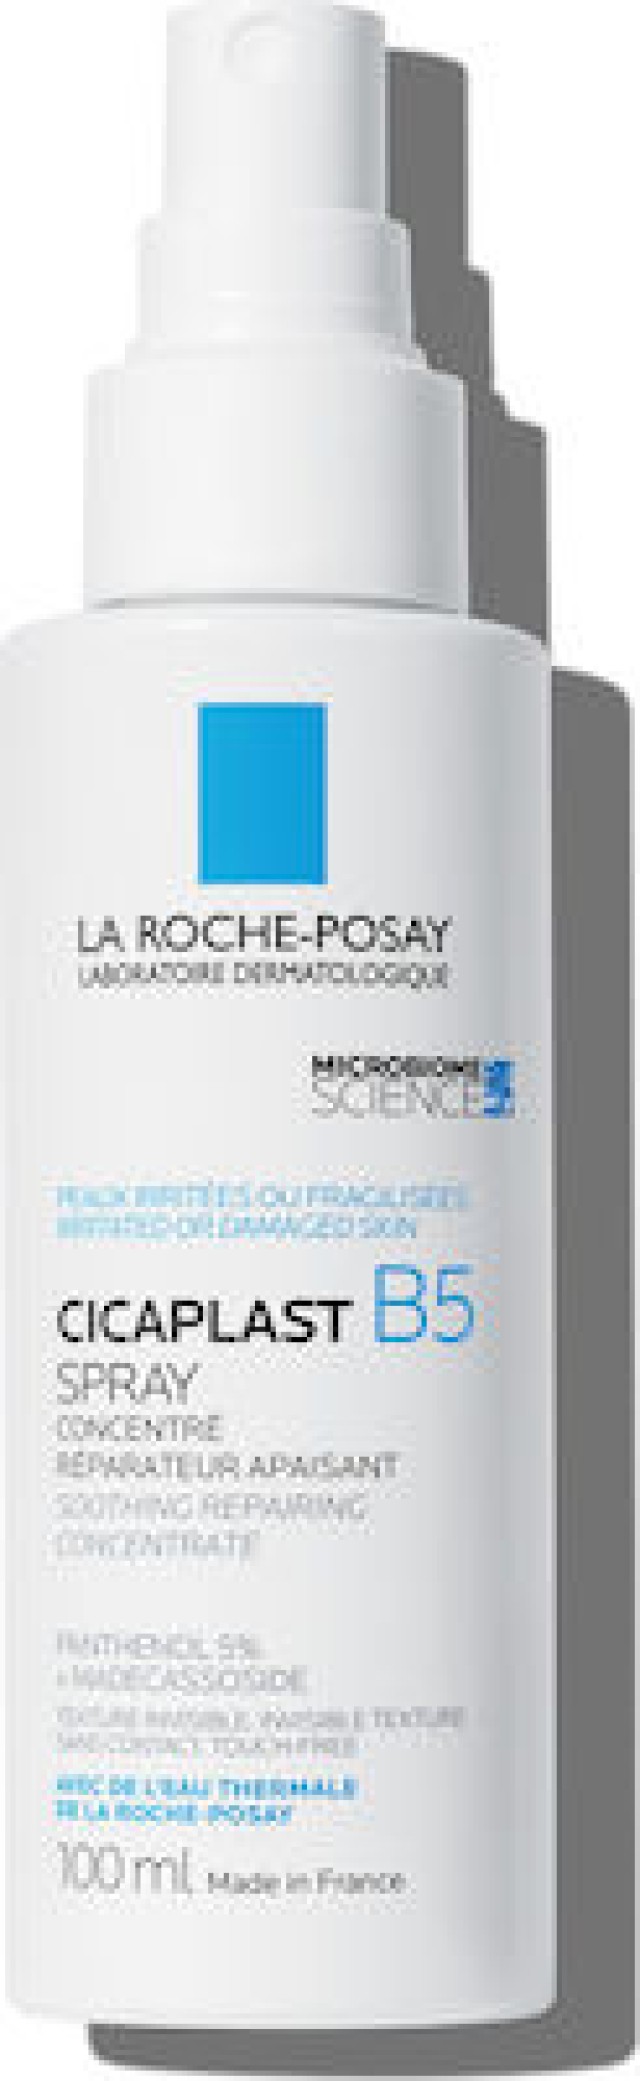 La Roche Posay Cicaplast B5 Spray Καταπραϋντική & Αναπλαστική Δράση 100ml